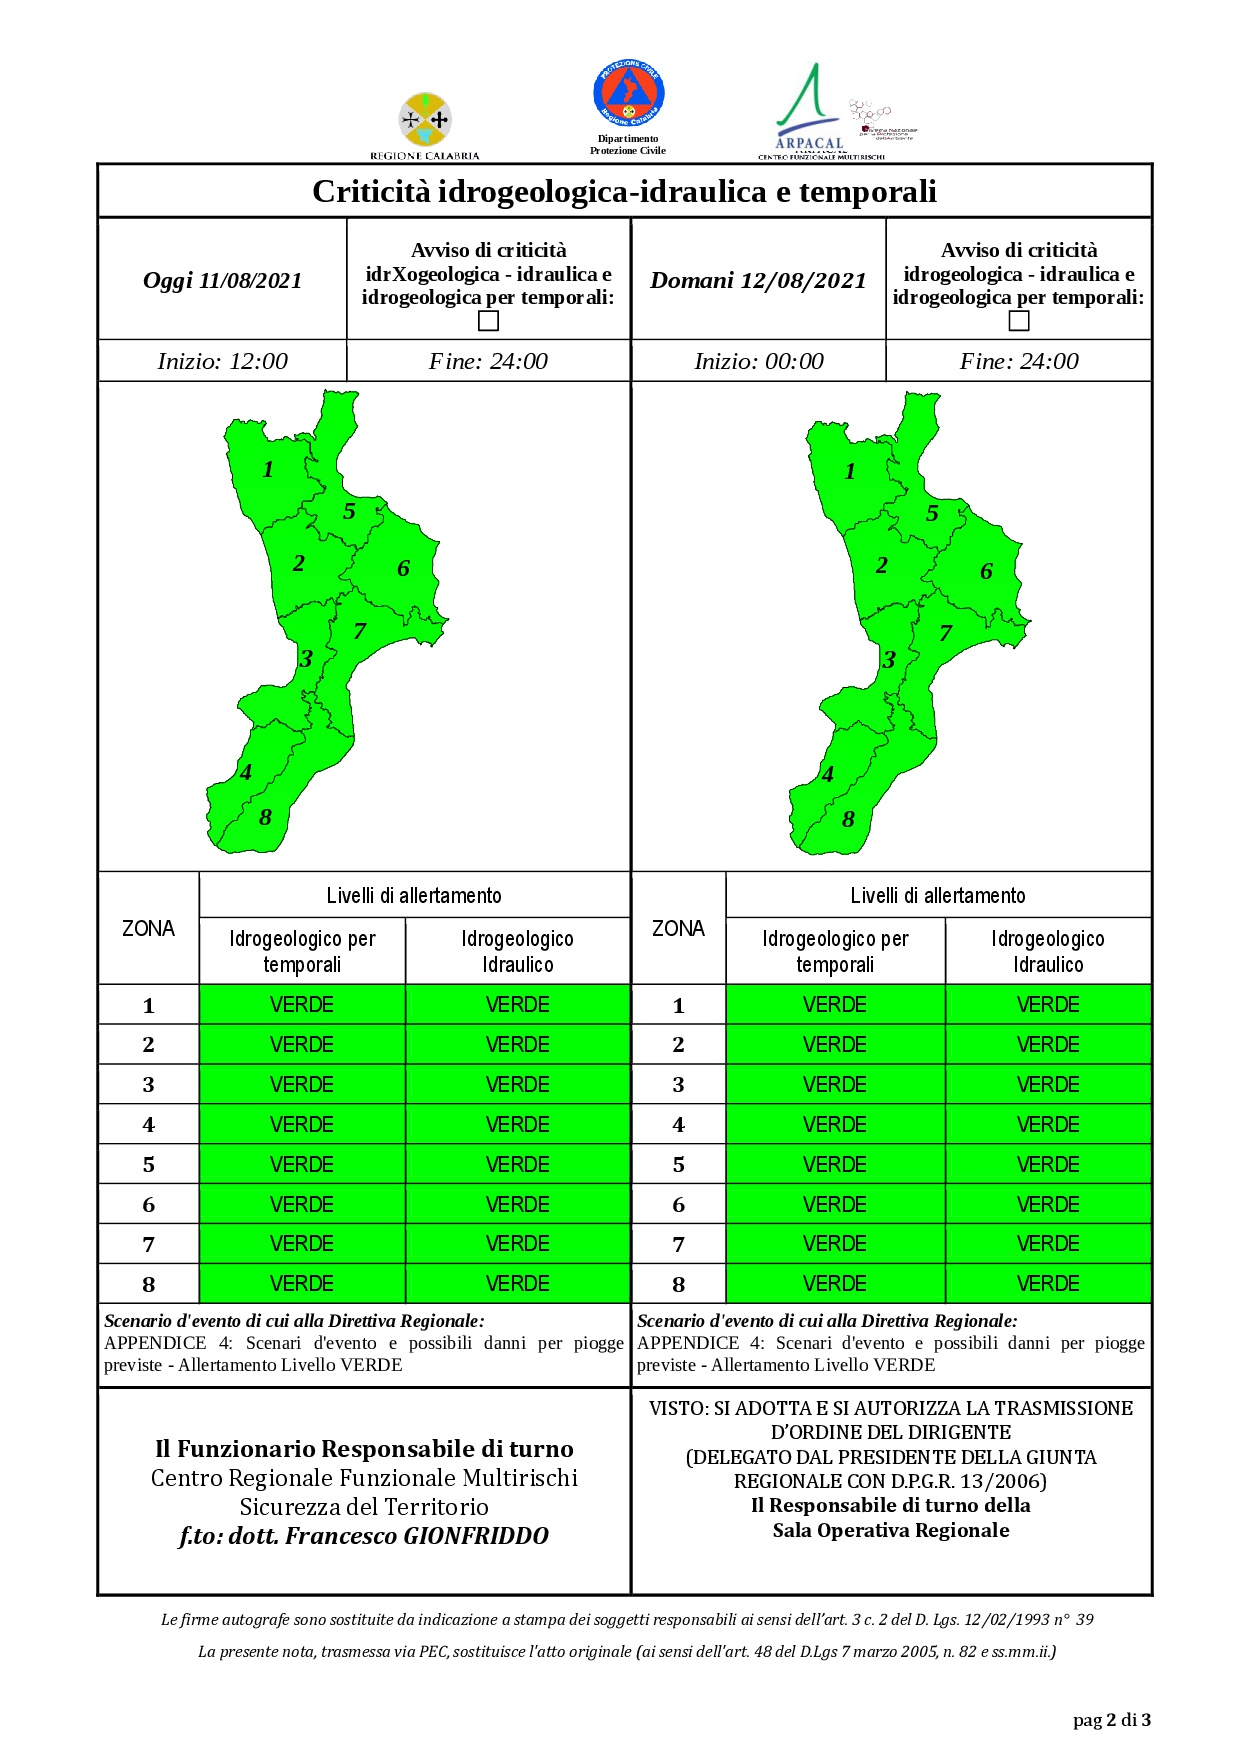 Criticità idrogeologica-idraulica e temporali in Calabria 11-08-2021